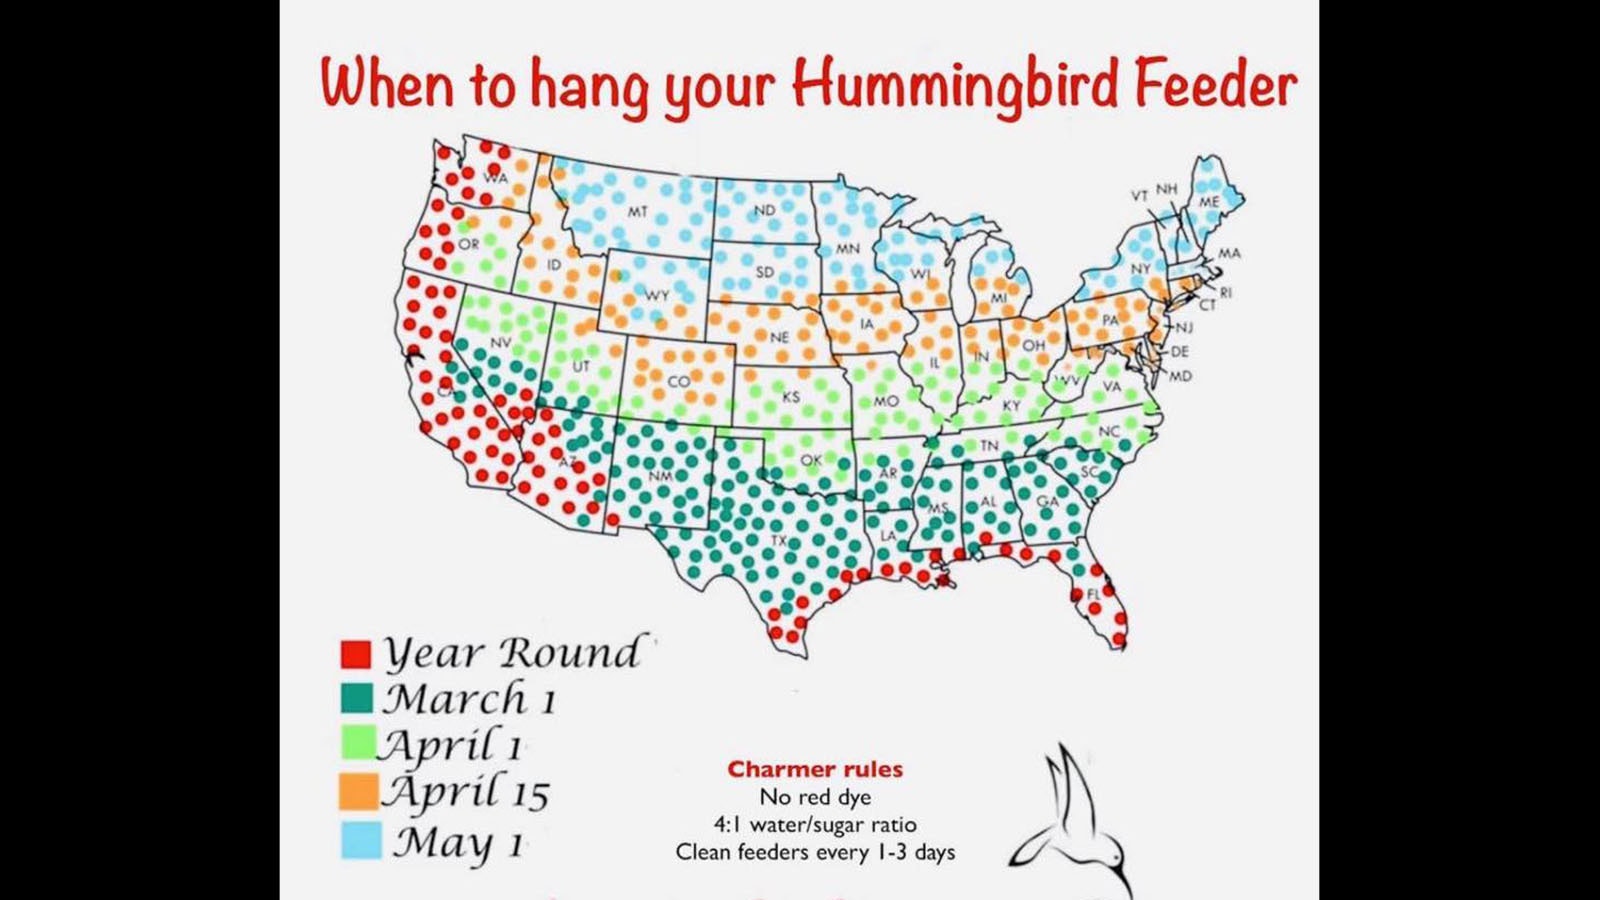 Signs of Spring Humminbird feeder advice 3 23 24